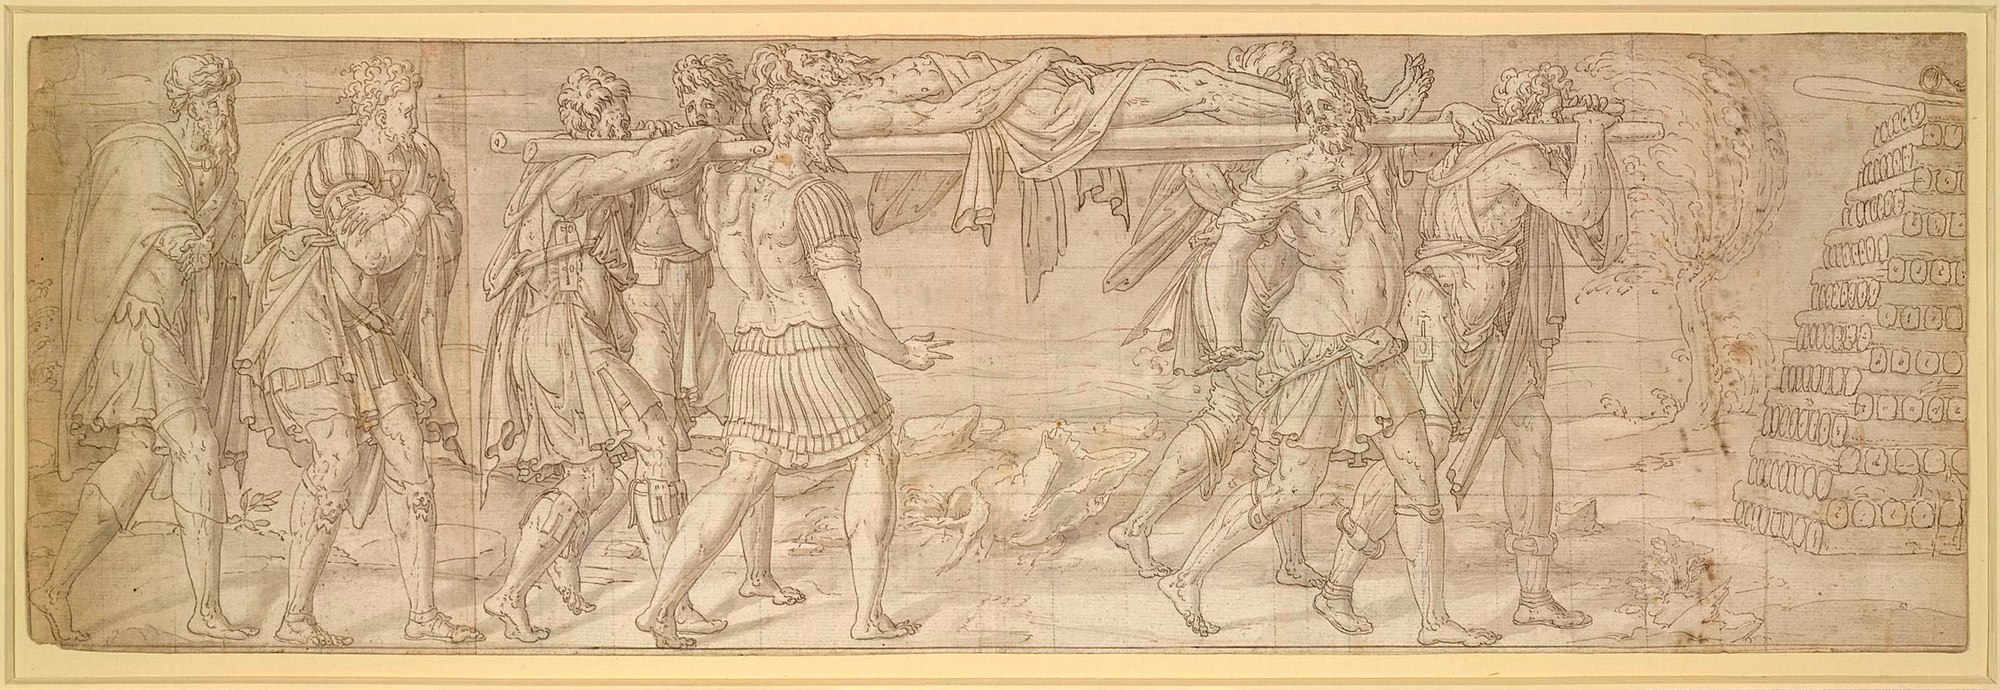 Funeral of Misenus (c. 1540) by Luca Penni